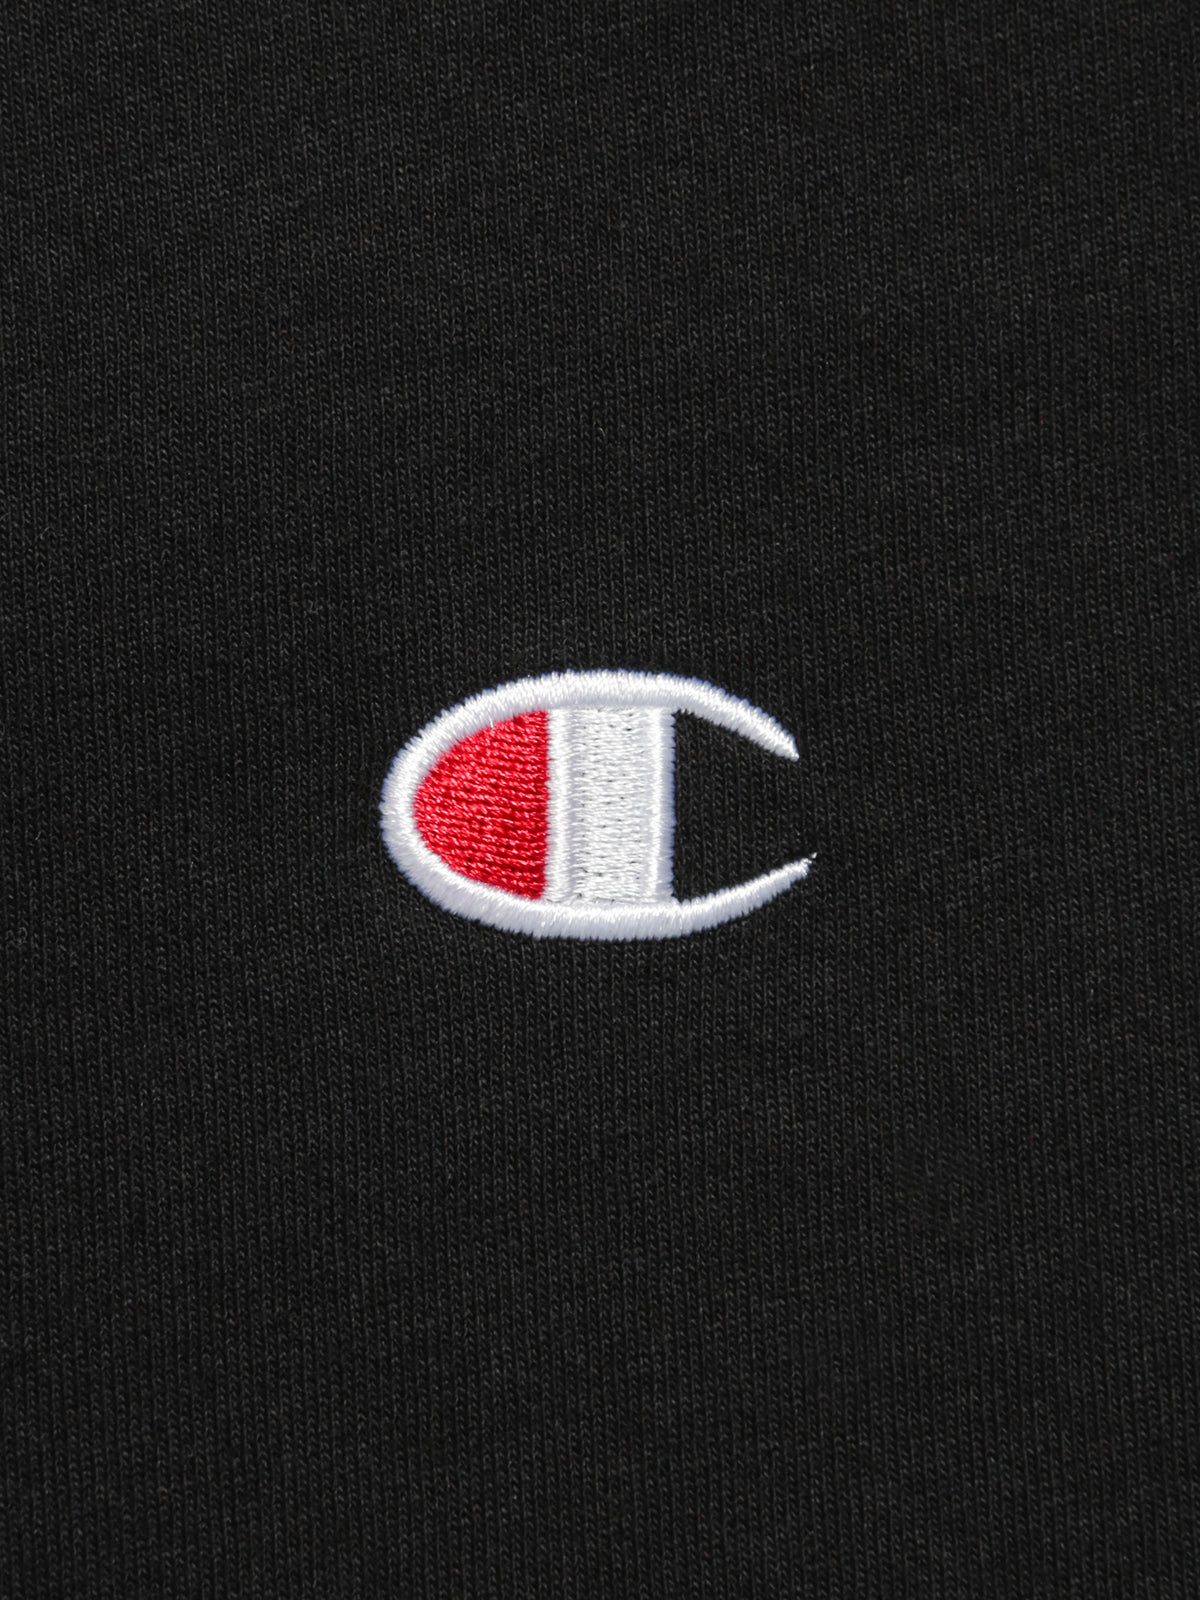 Heritage Crop C Logo T-Shirt in Black